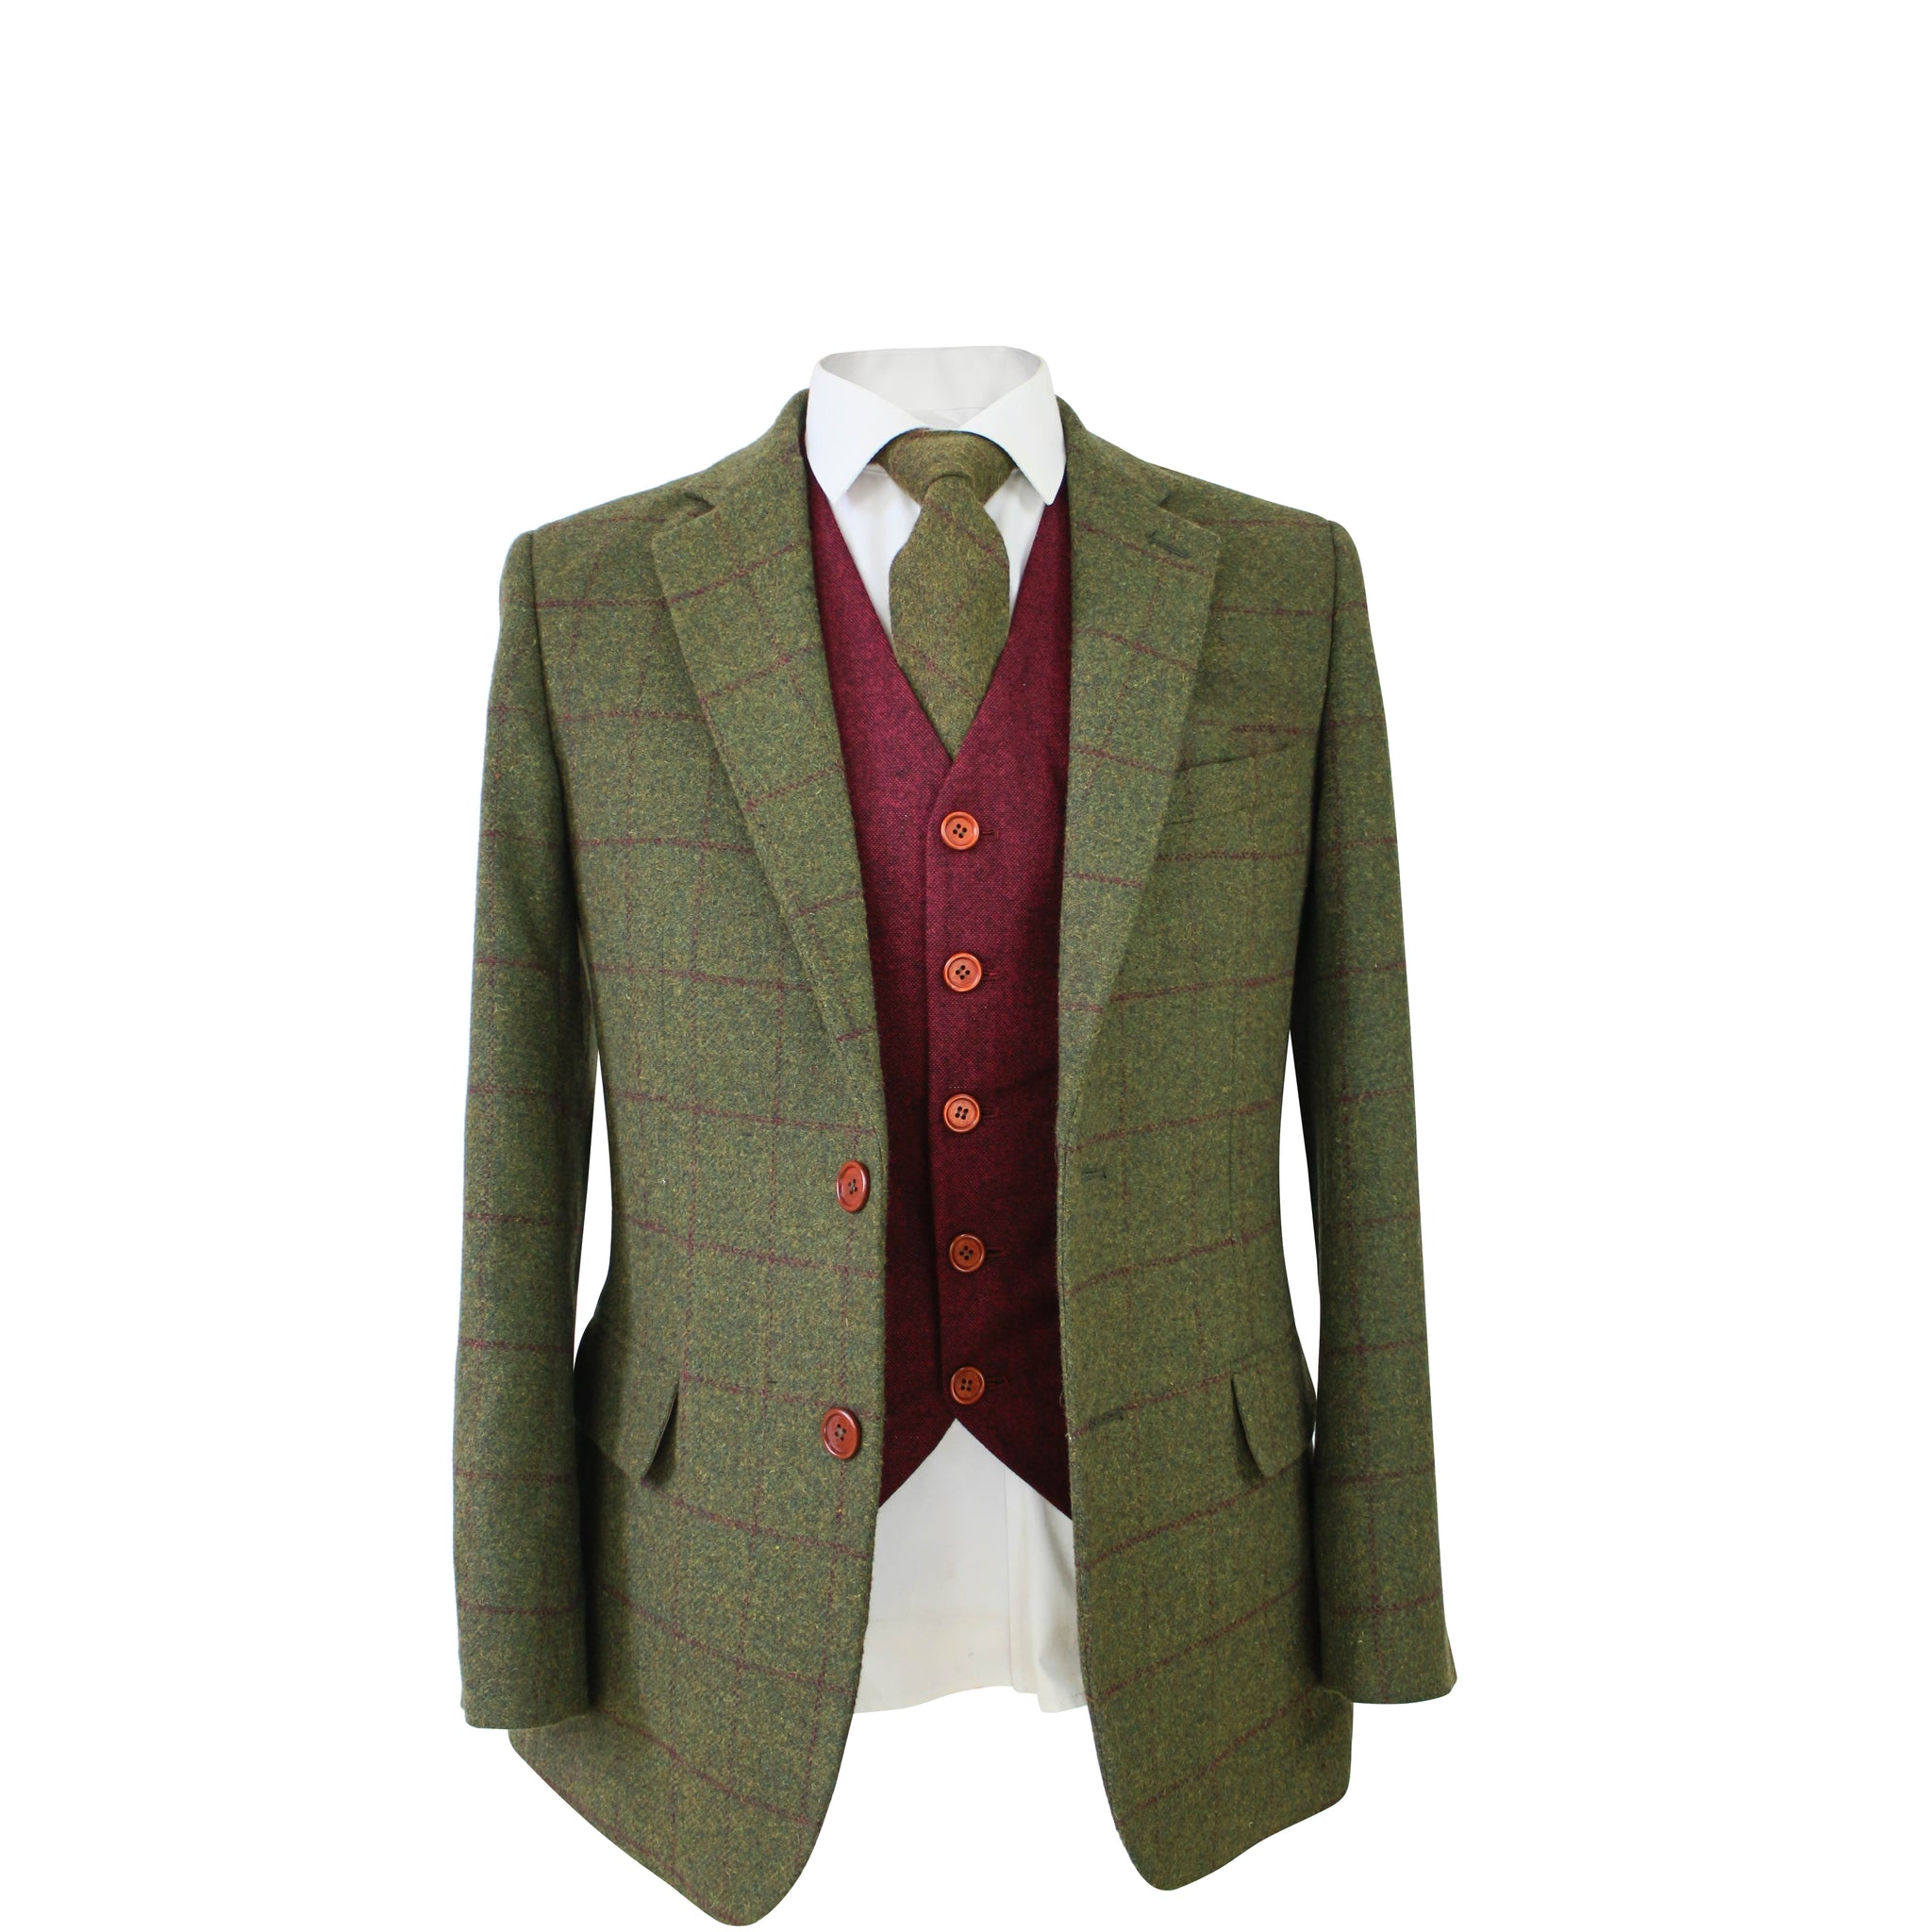 Olive Green Check Tweed Jacket & Waistcoat USA Clearance (Red Waistcoat)